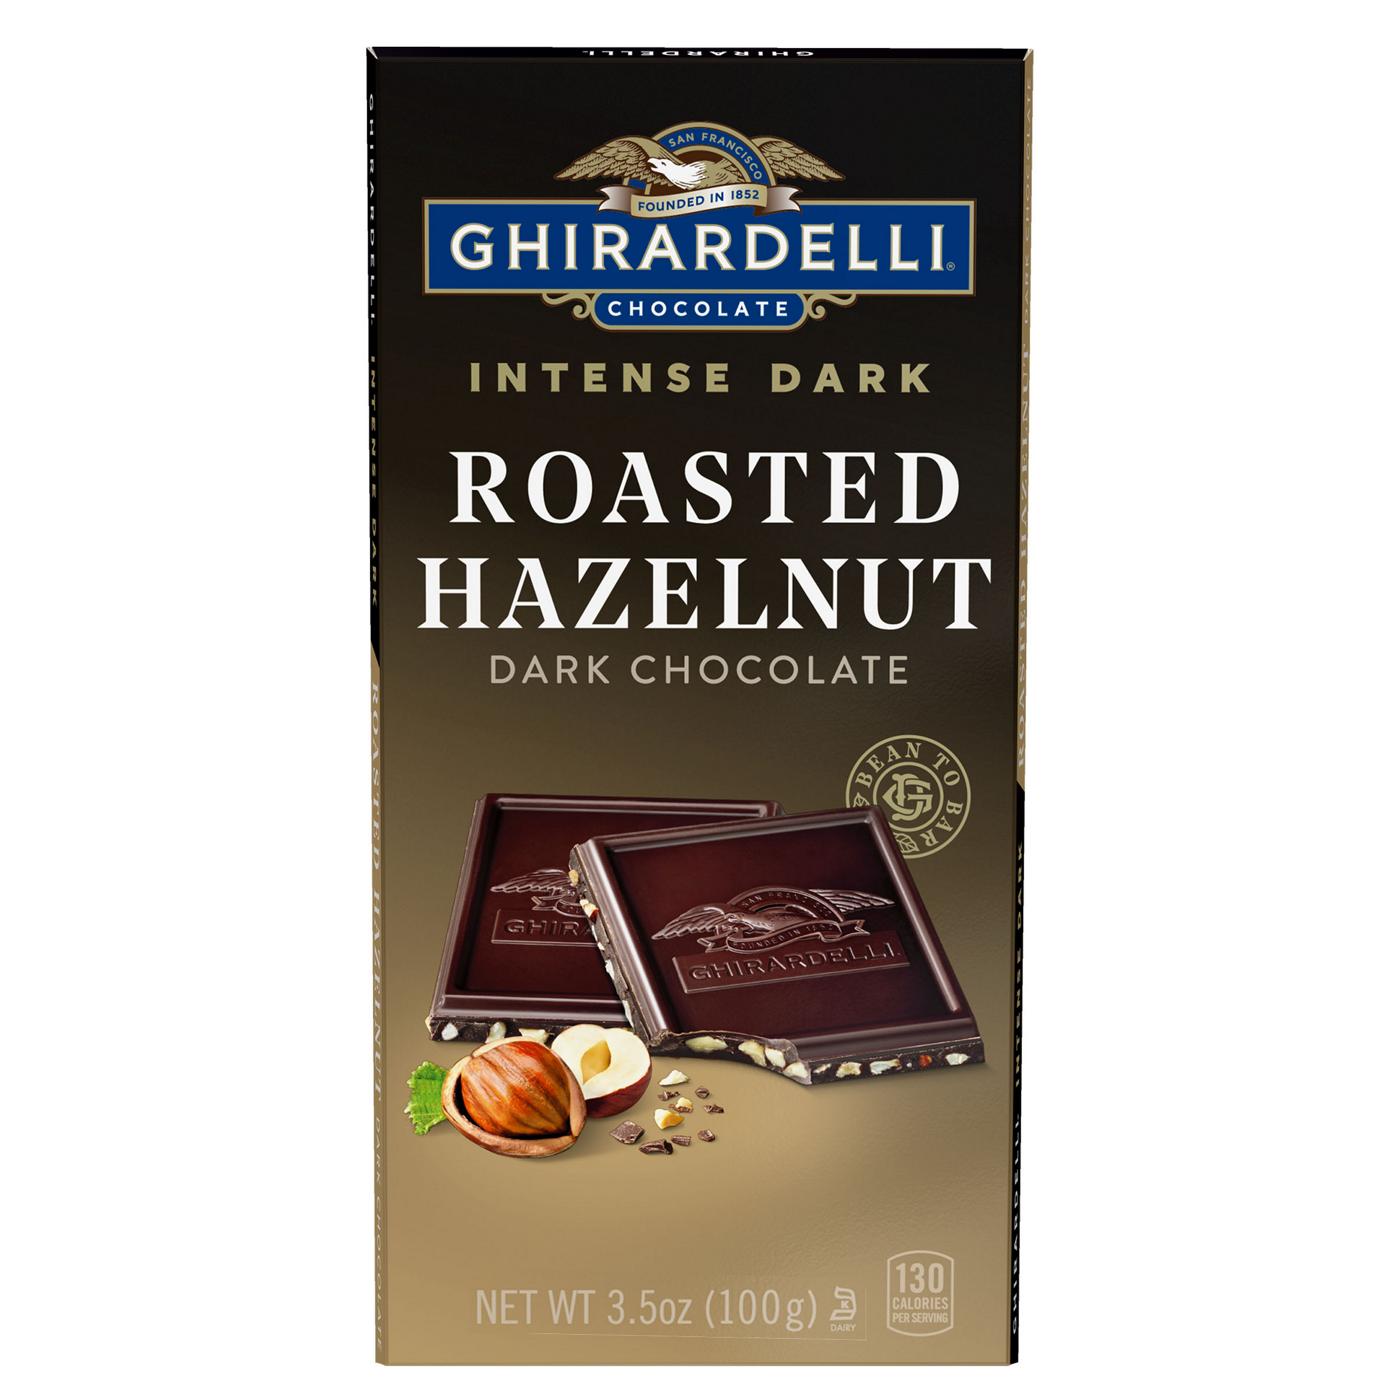 Ghirardelli Chocolate Intense Dark Roasted Hazelnut Chocolate Bar; image 1 of 6